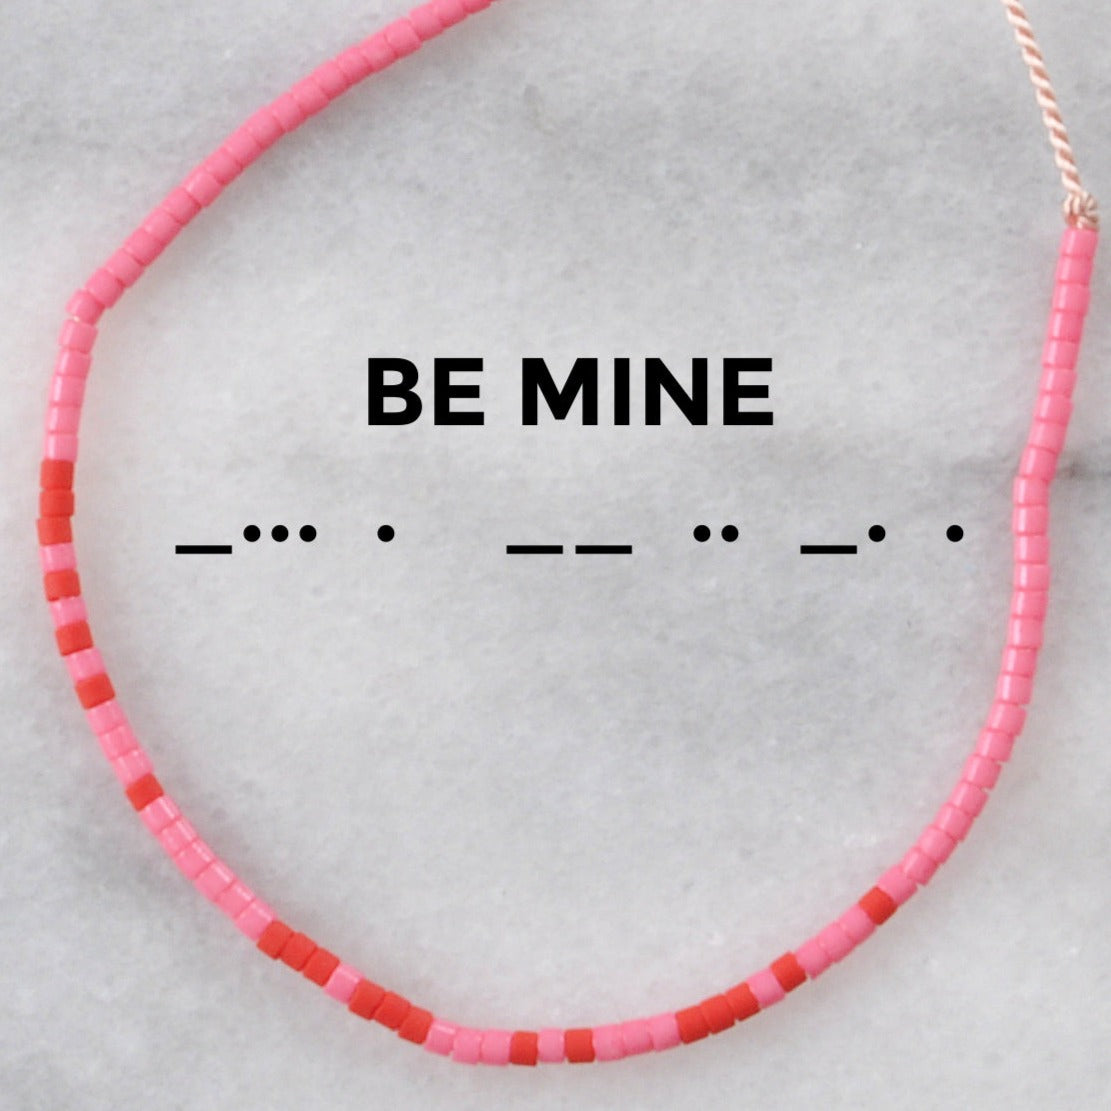 Valentine String Bracelets